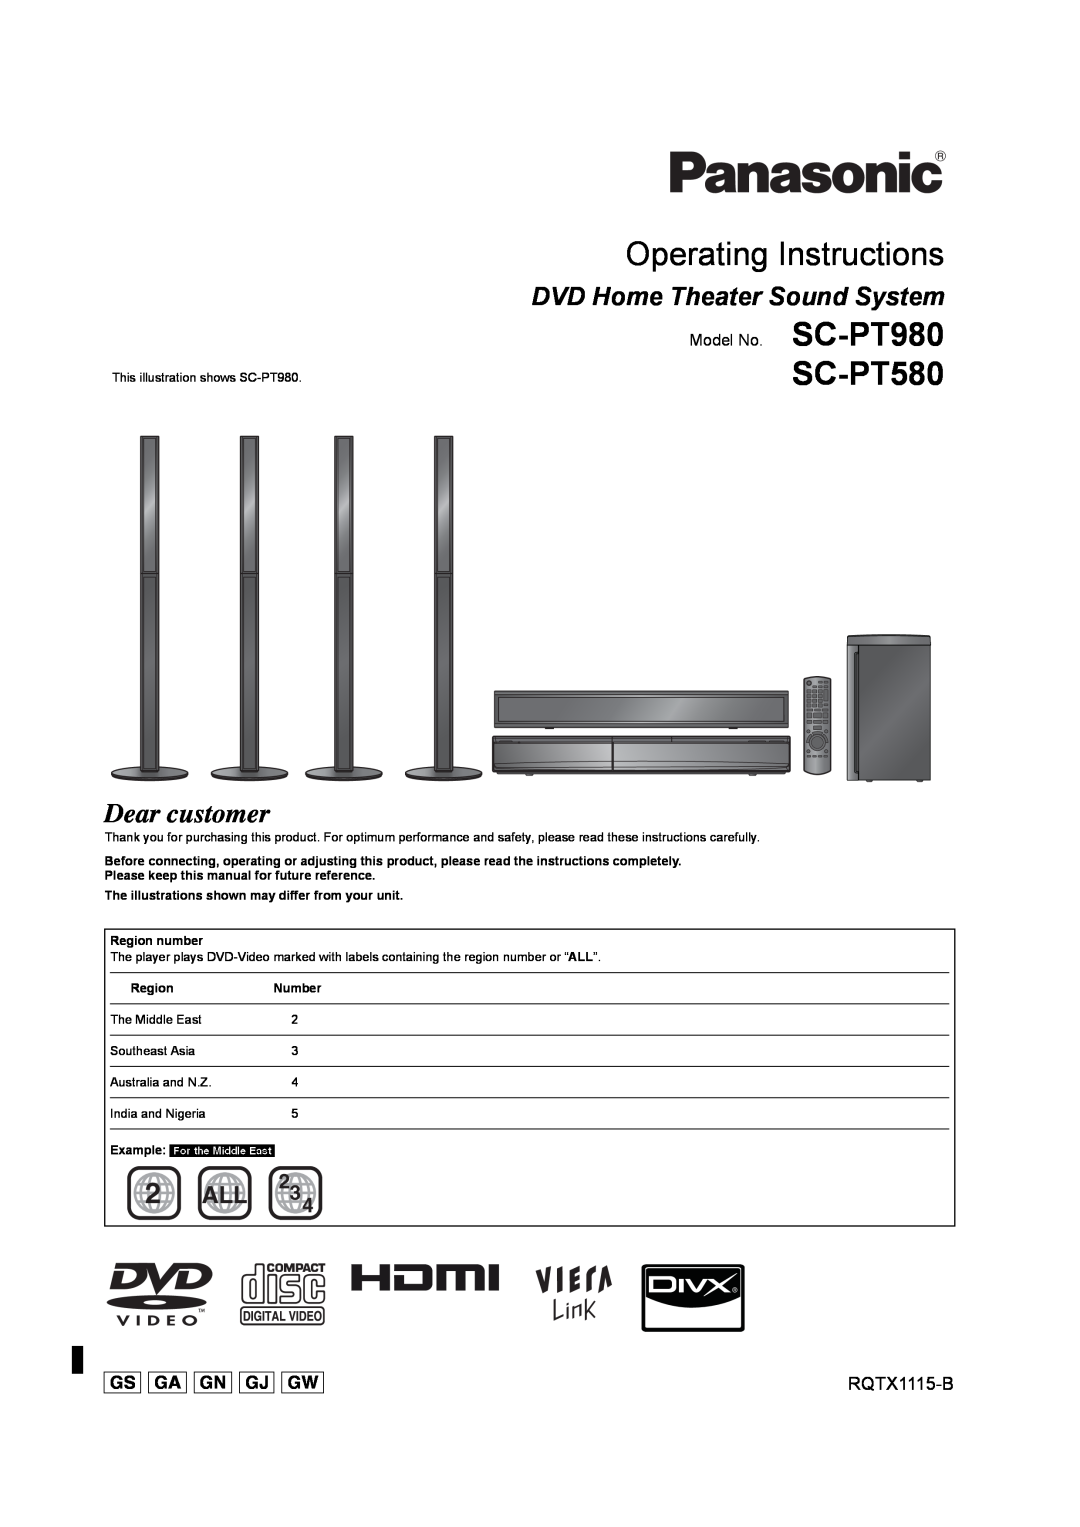 Panasonic SC-PT980 manual SC-PT580, RQTX1115-B, Operating Instructions, DVD Home Theater Sound System, 2 ALL 